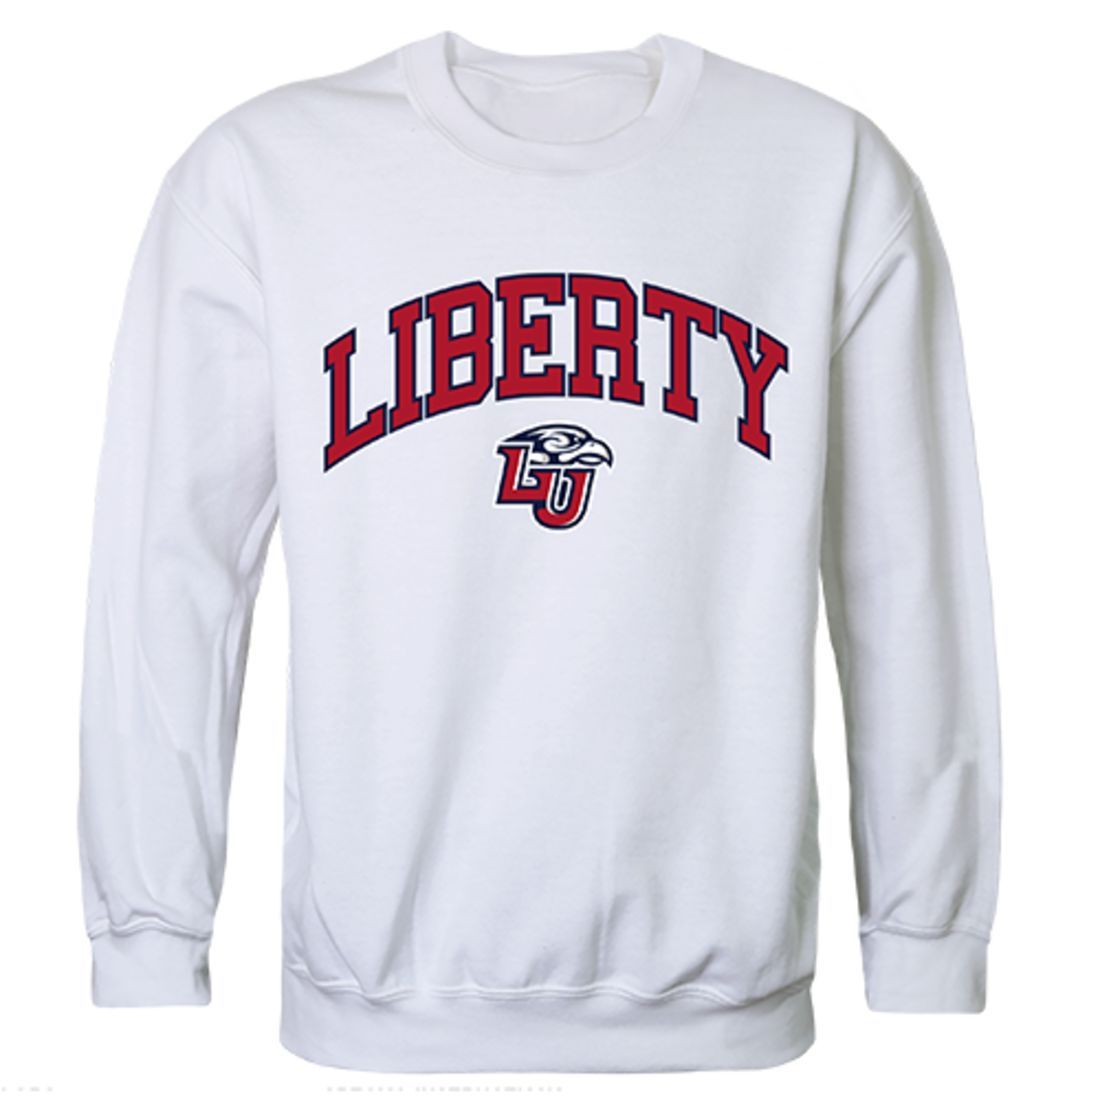 Liberty University Campus Crewneck Pullover Sweatshirt Sweater White-Campus-Wardrobe